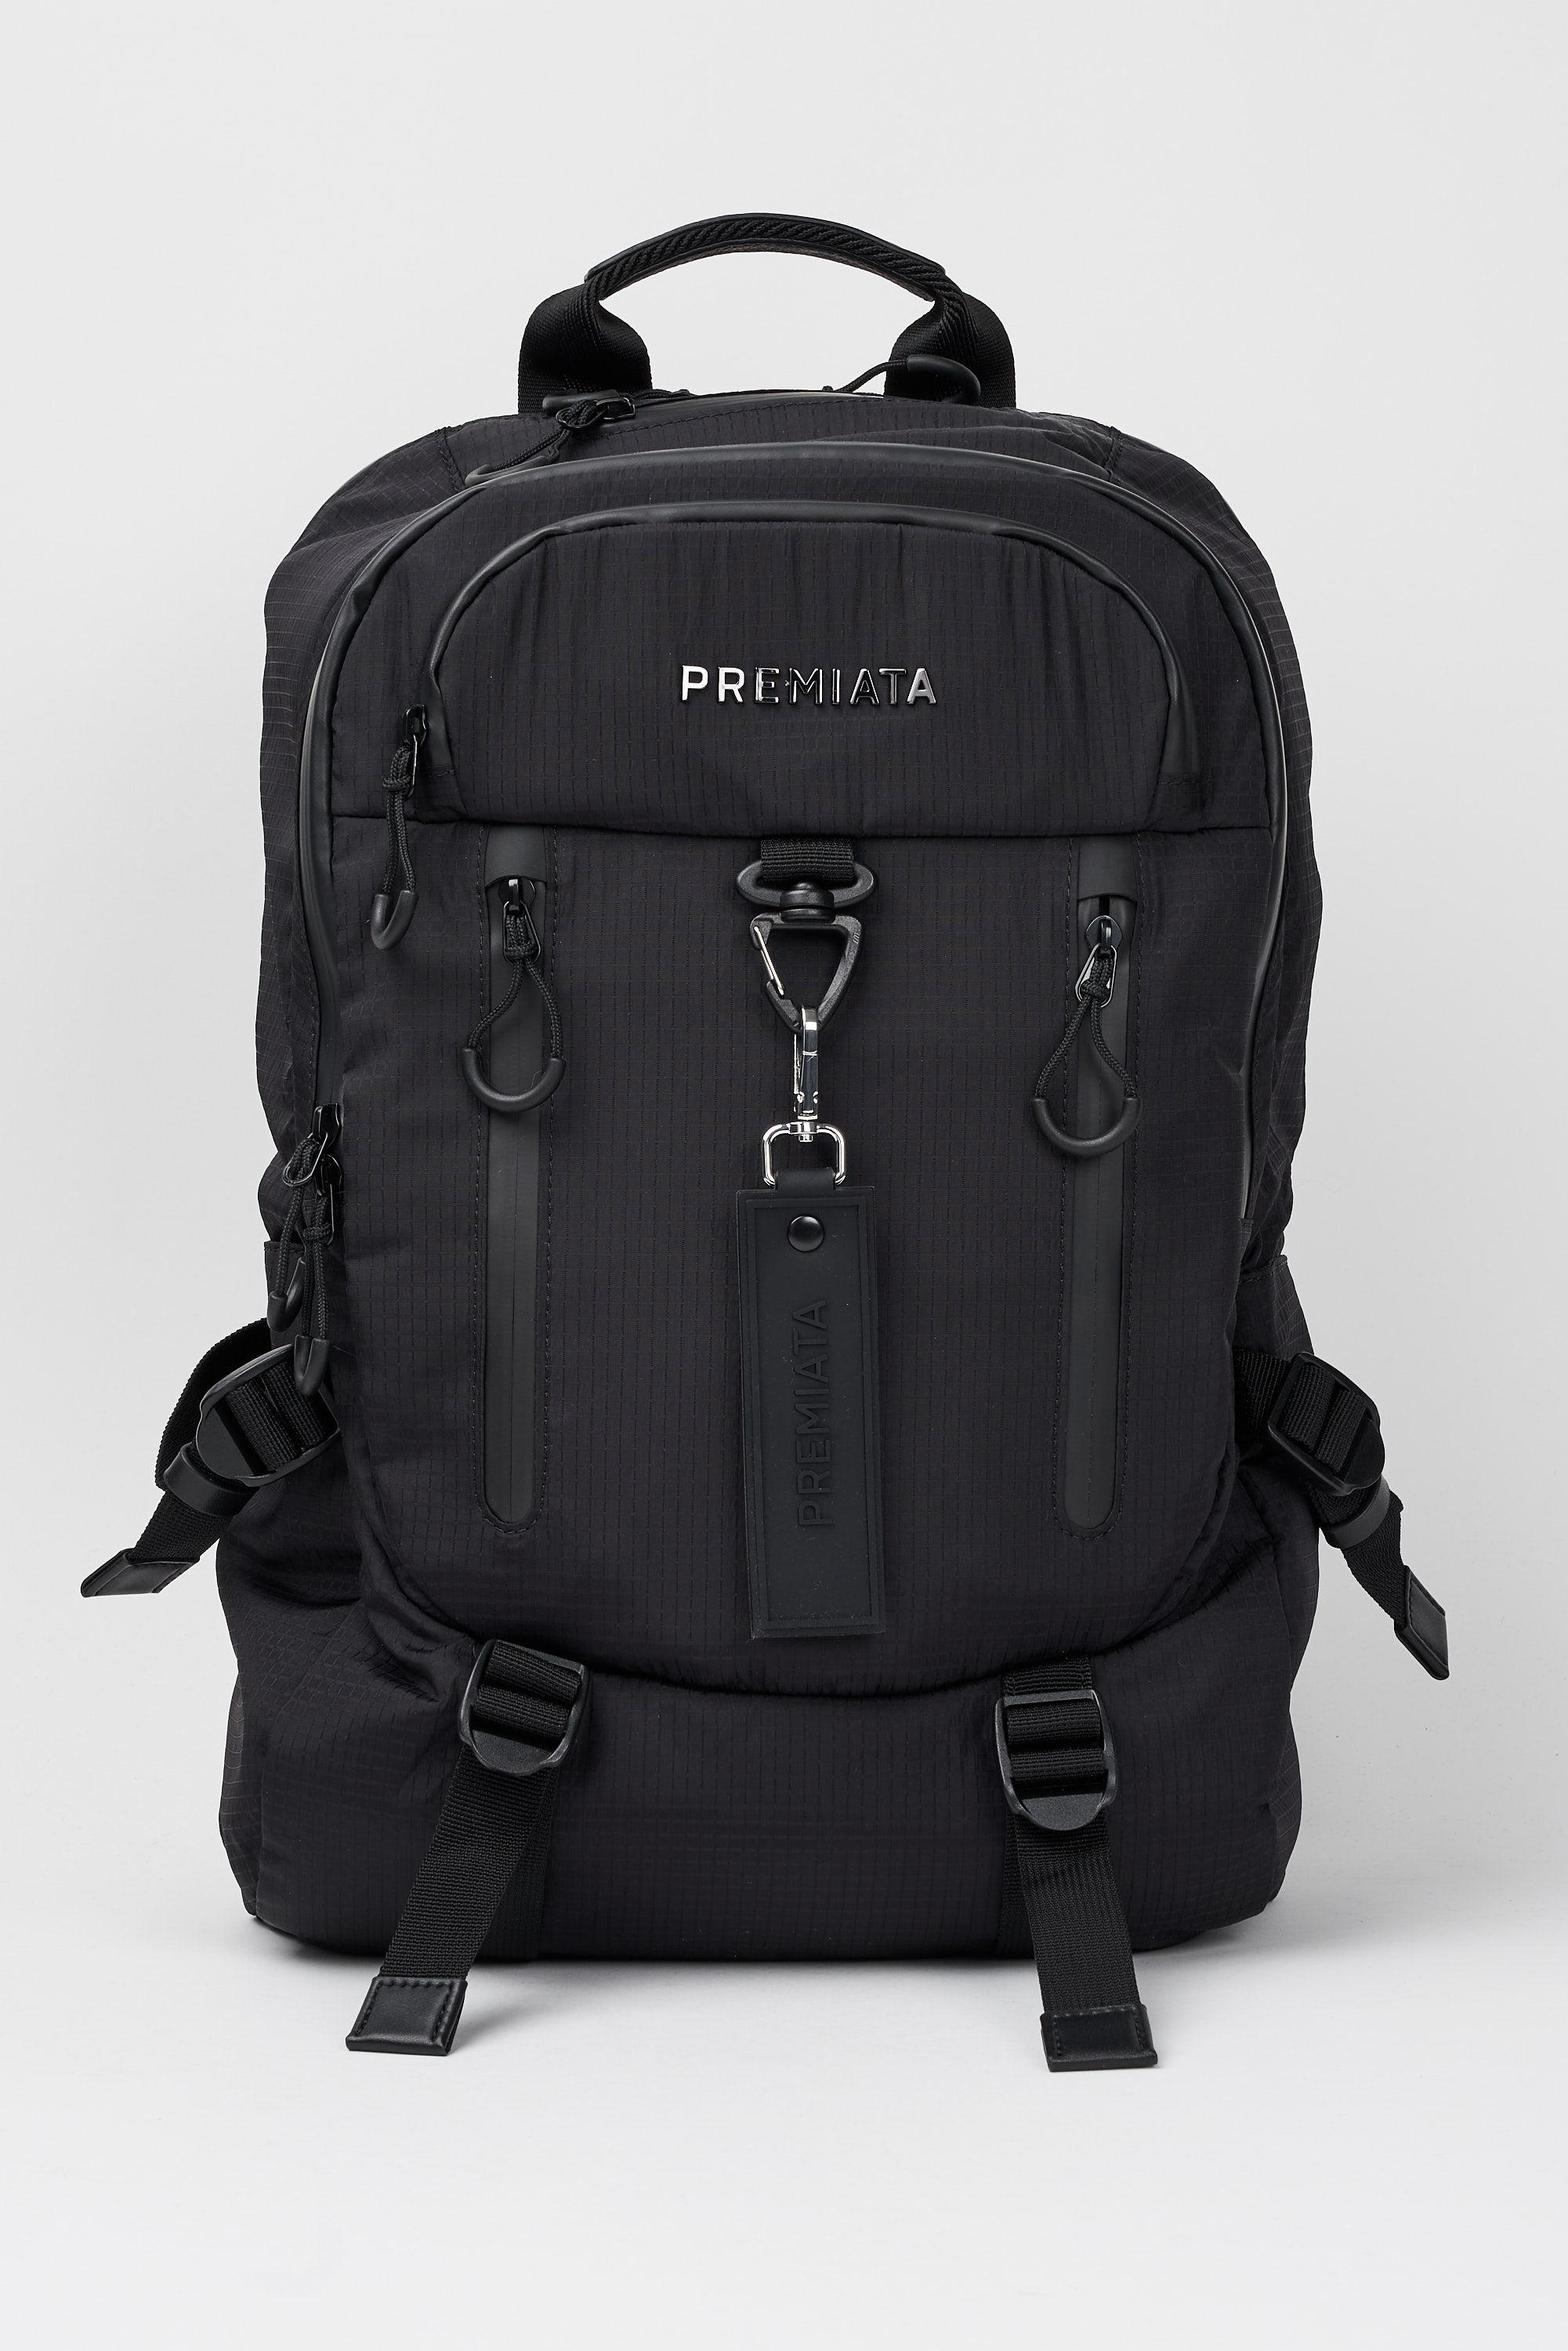 Premiata Backpack Ventura Leather/Nylon Black-1